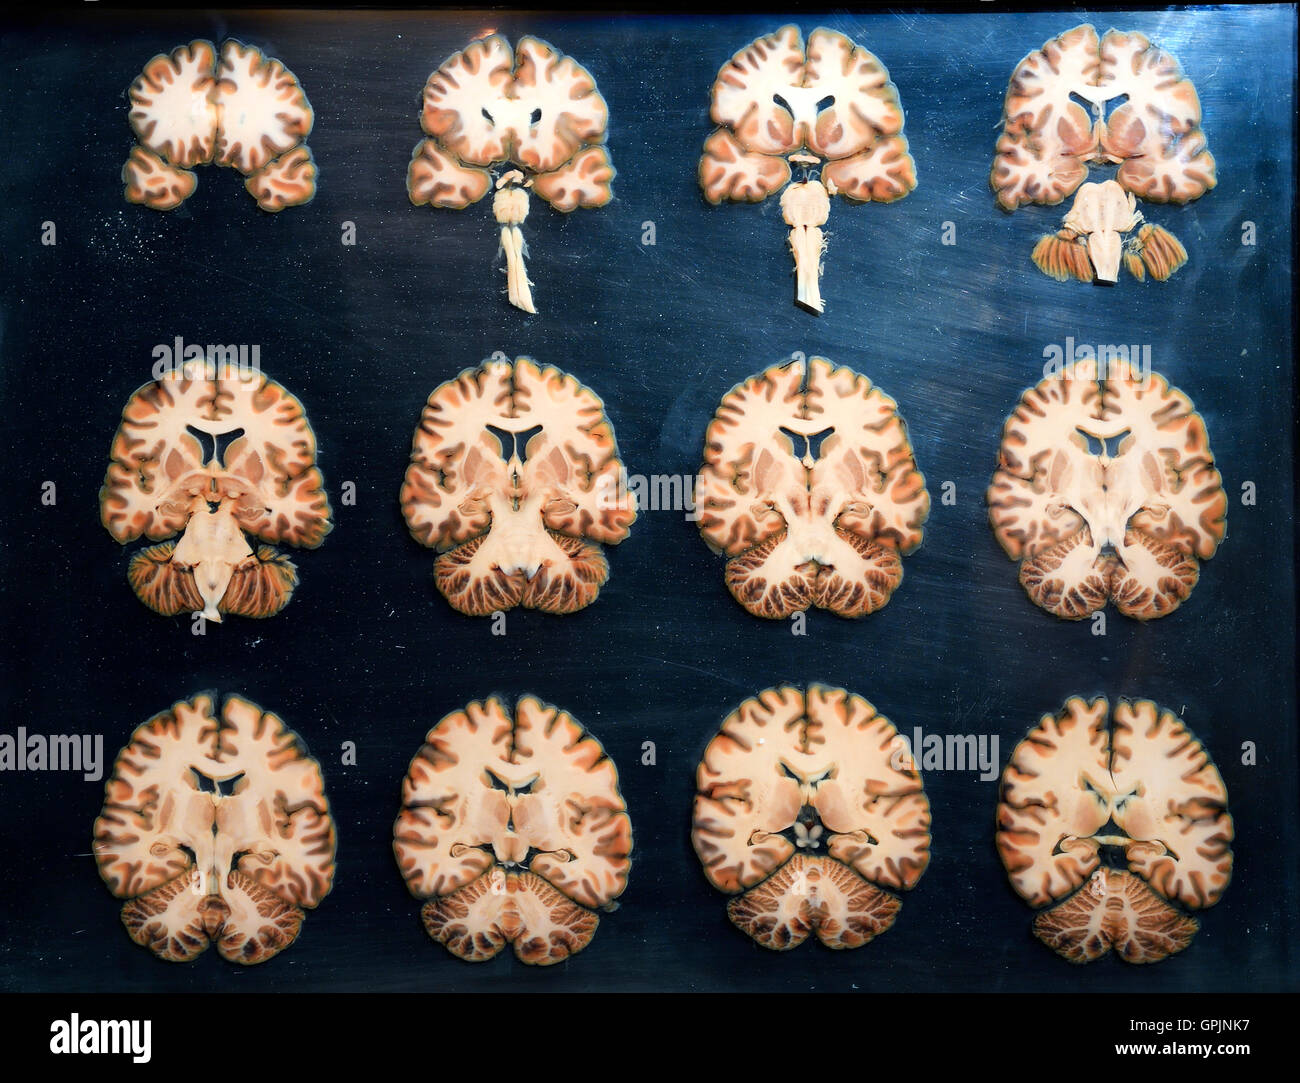 Plastinate, cross sections through human brain, Body Worlds, Menschen Museum, Berlin, Germany Stock Photo